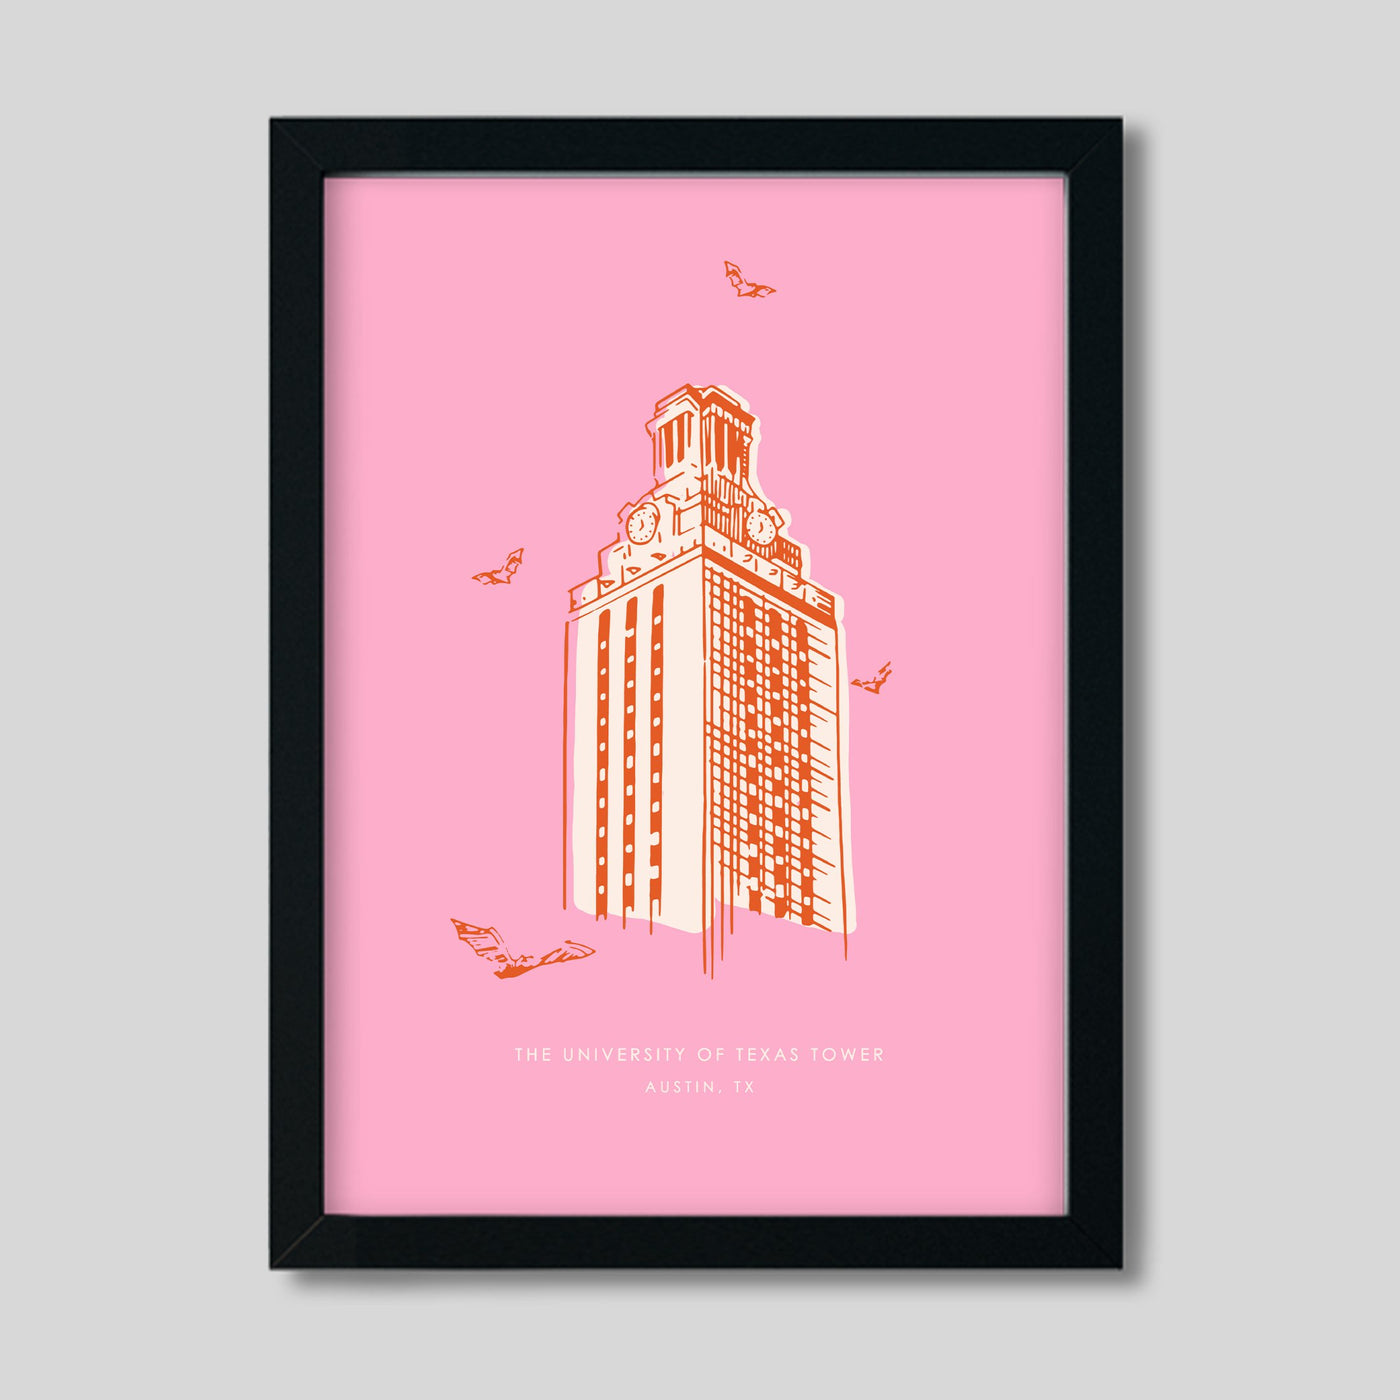 Gallery Prints Pink Print / 8x10 / Black Frame Austin Tower Print Katie Kime